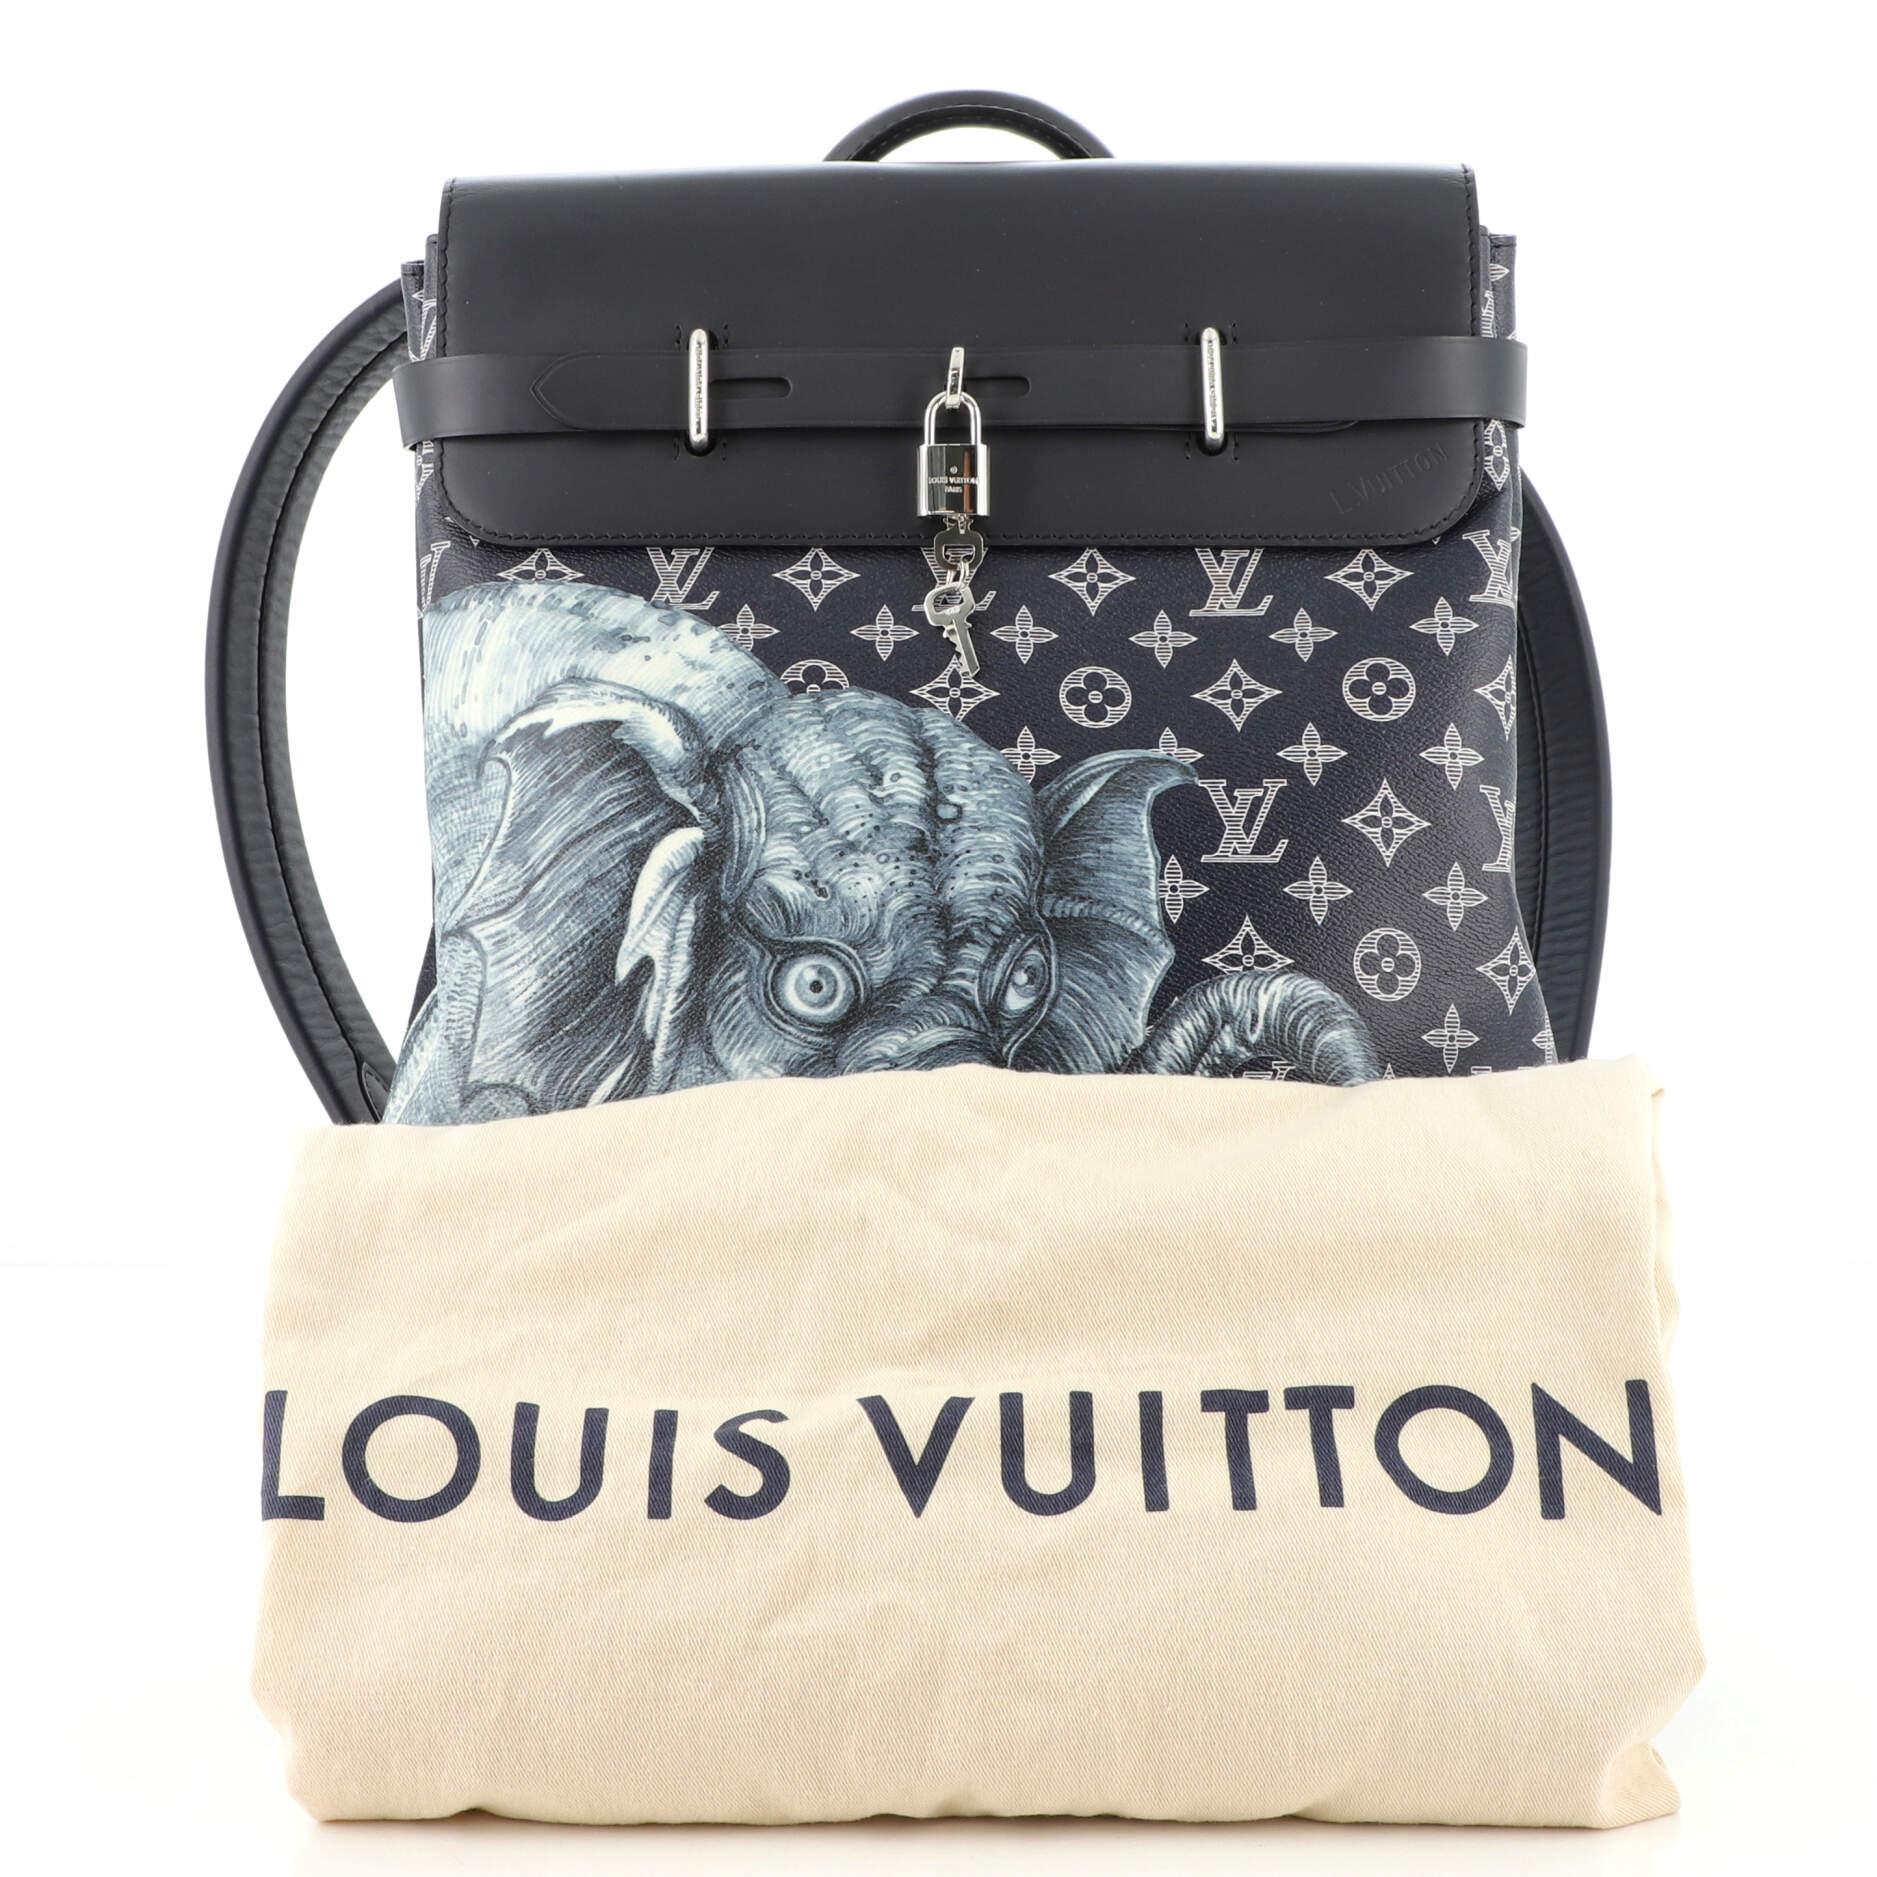 Sell Louis Vuitton Rhino Savane e Bag - Brown